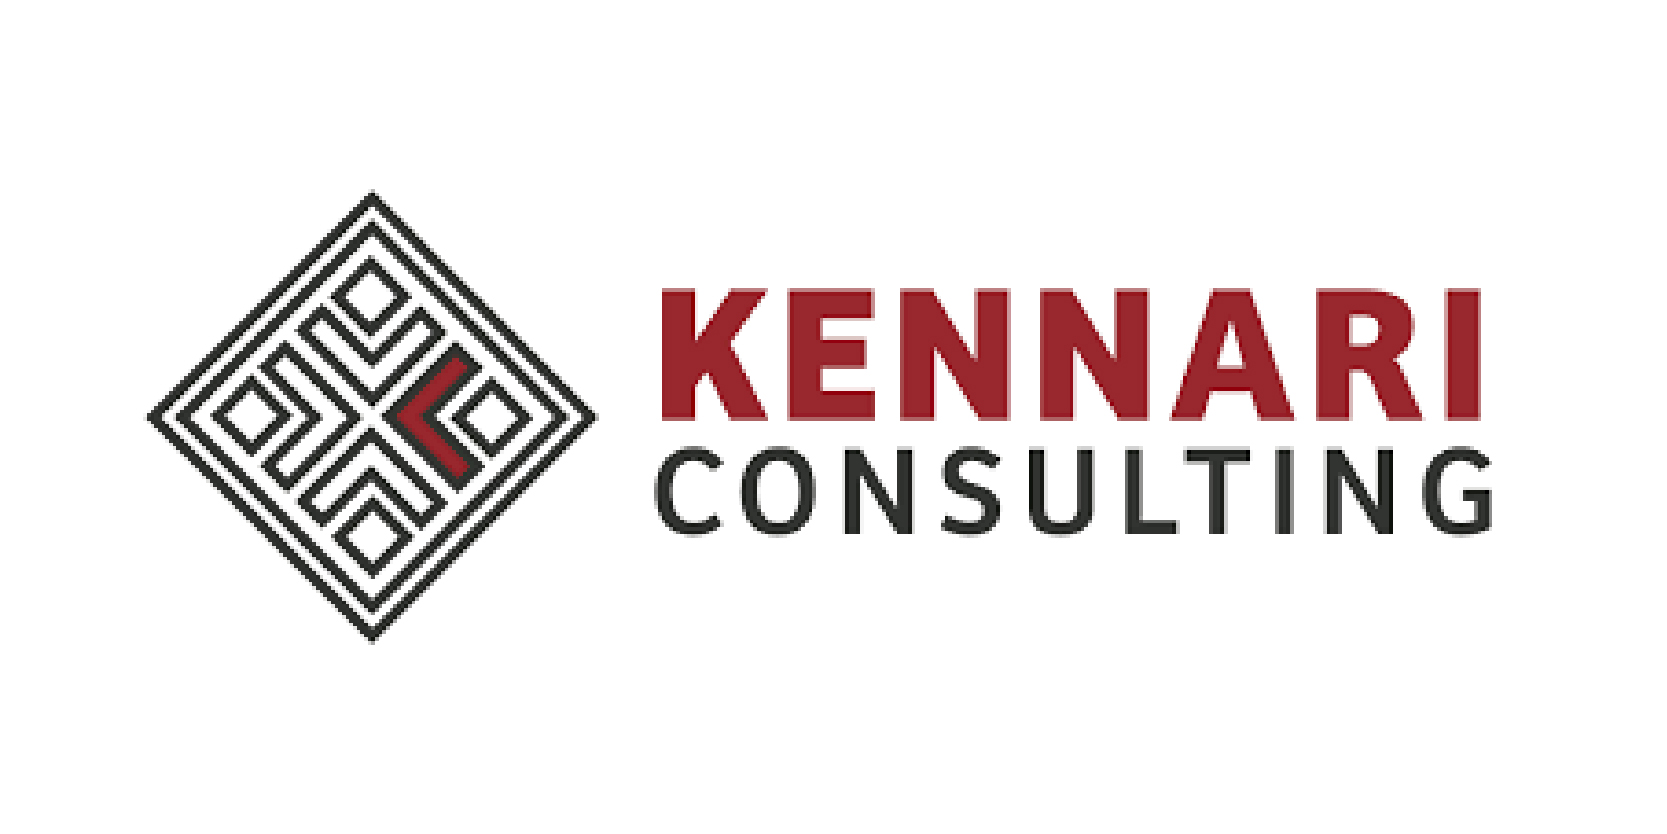 Kennari Consulting